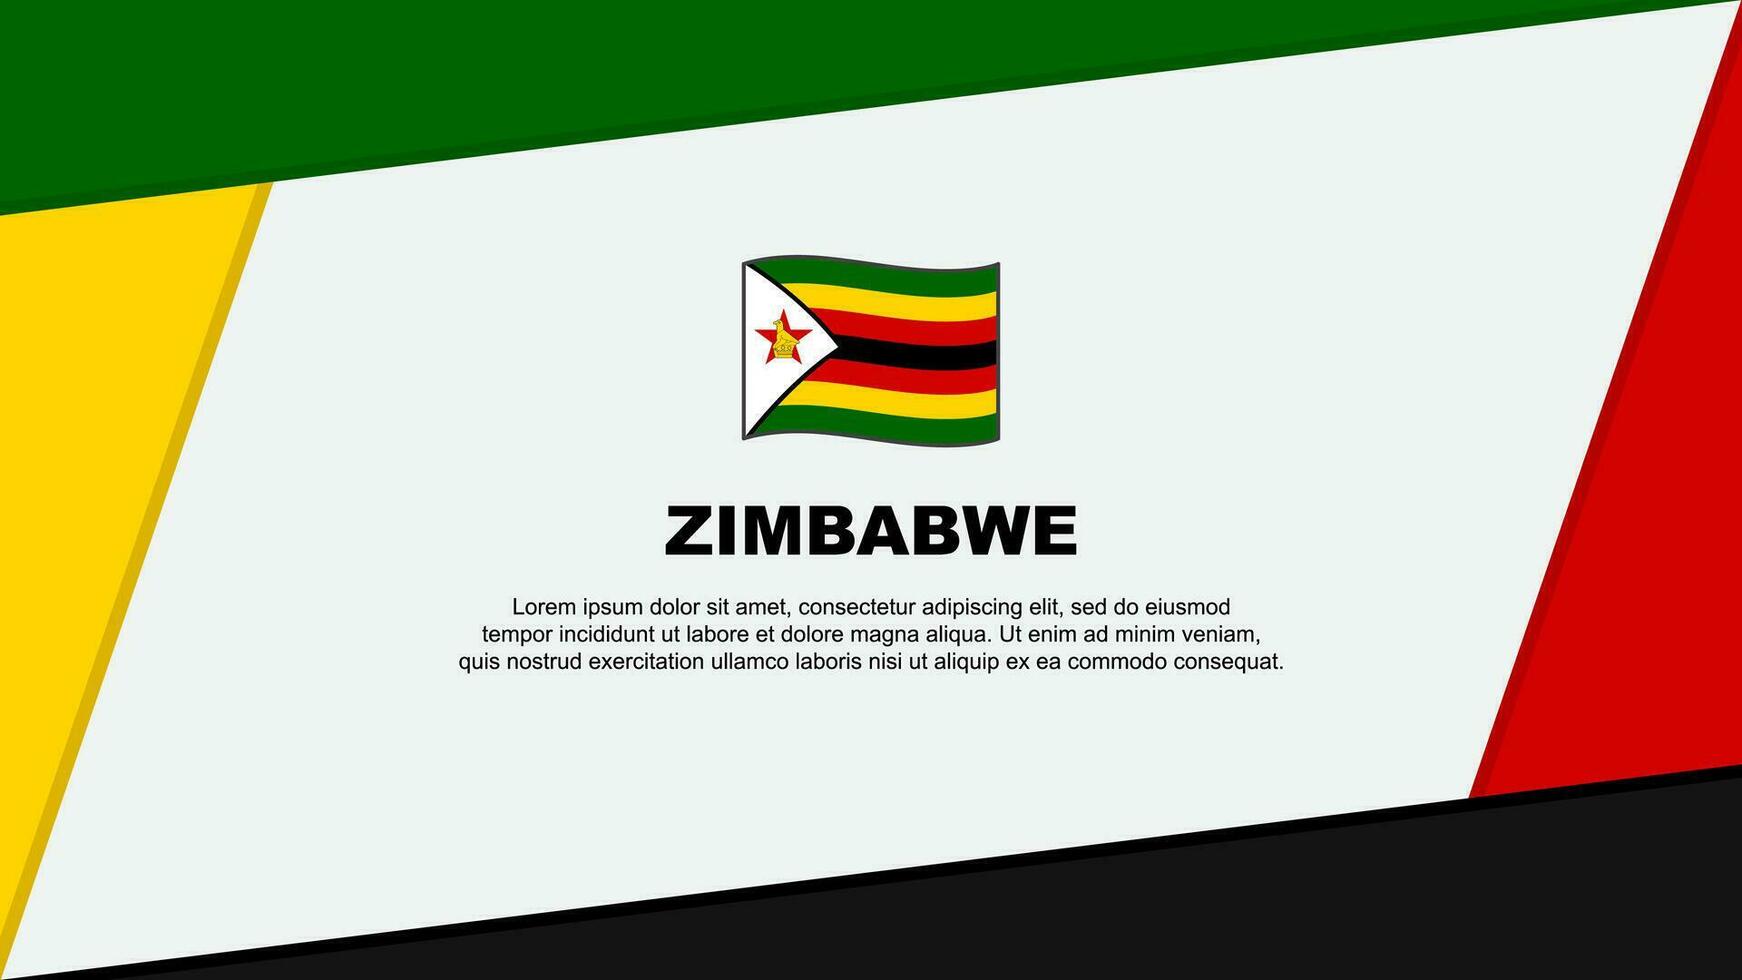 Zimbabwe Flag Abstract Background Design Template. Zimbabwe Independence Day Banner Cartoon Vector Illustration. Zimbabwe Banner